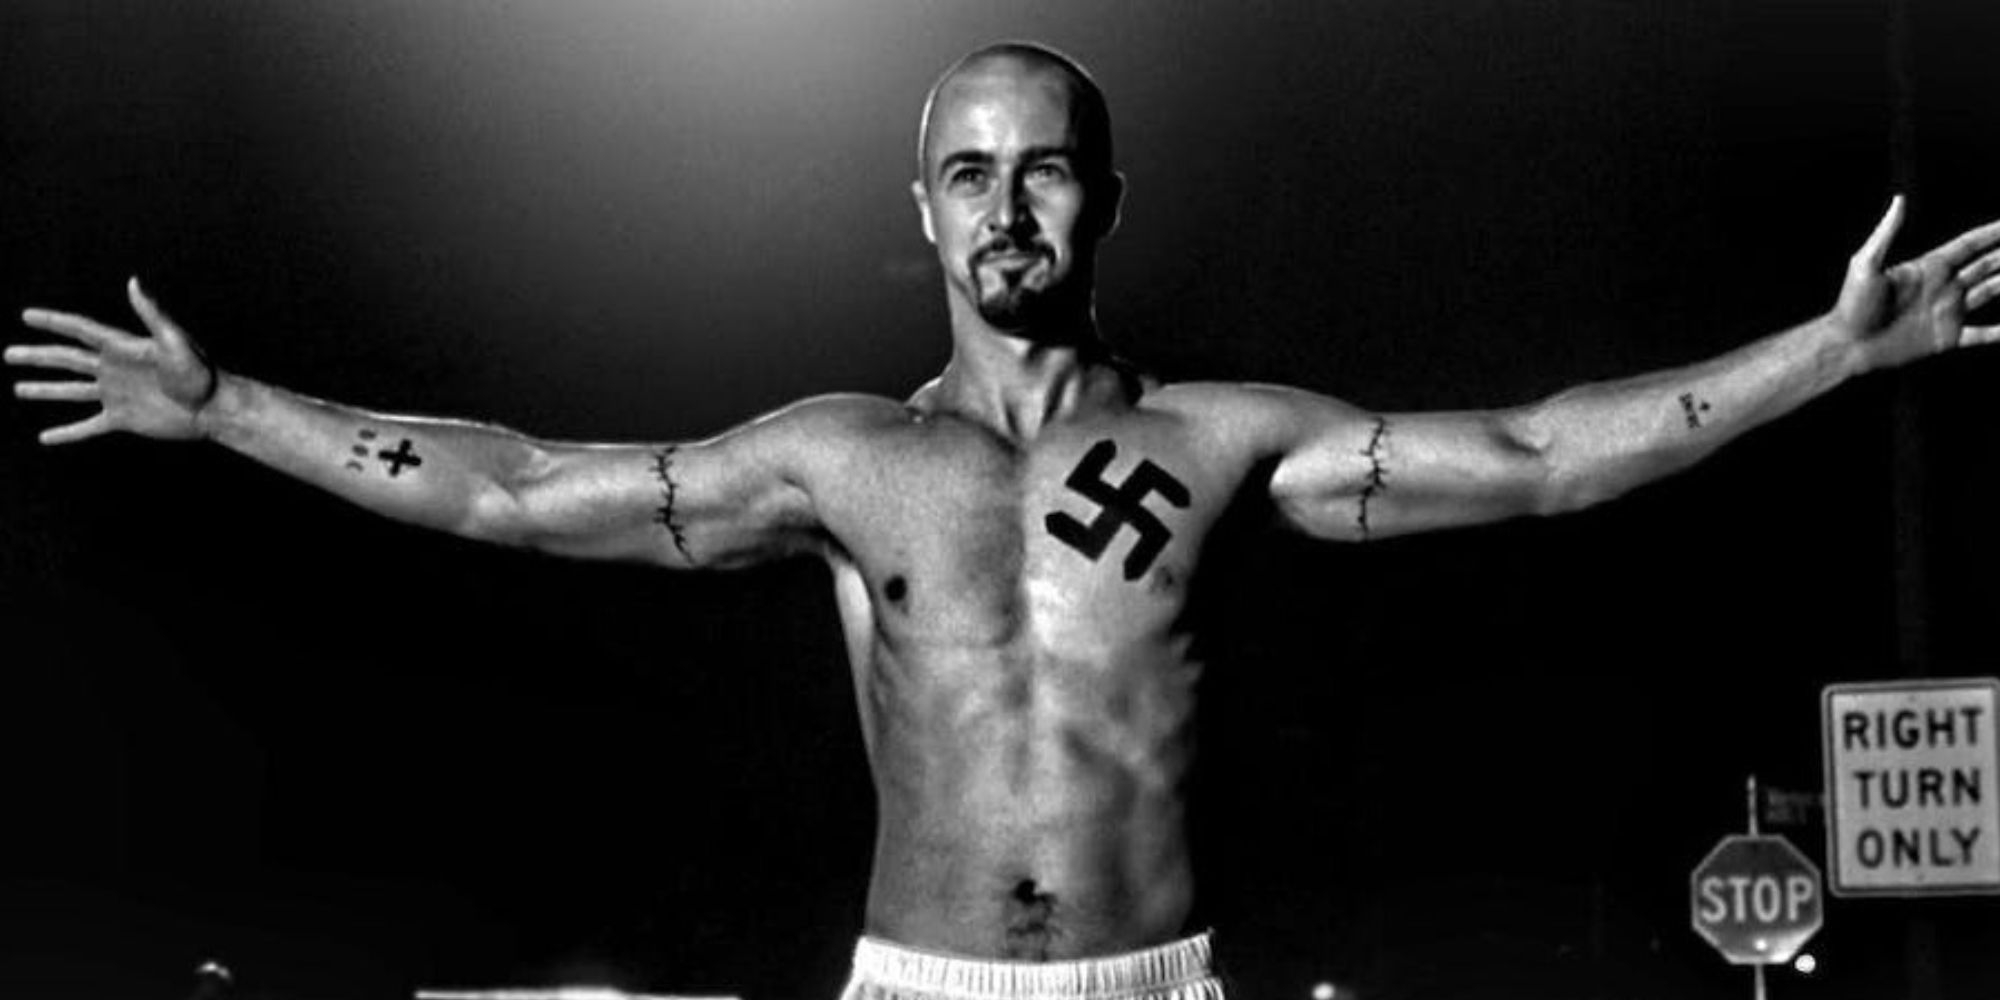 Edward Norton as a neo-Nazi in American History X